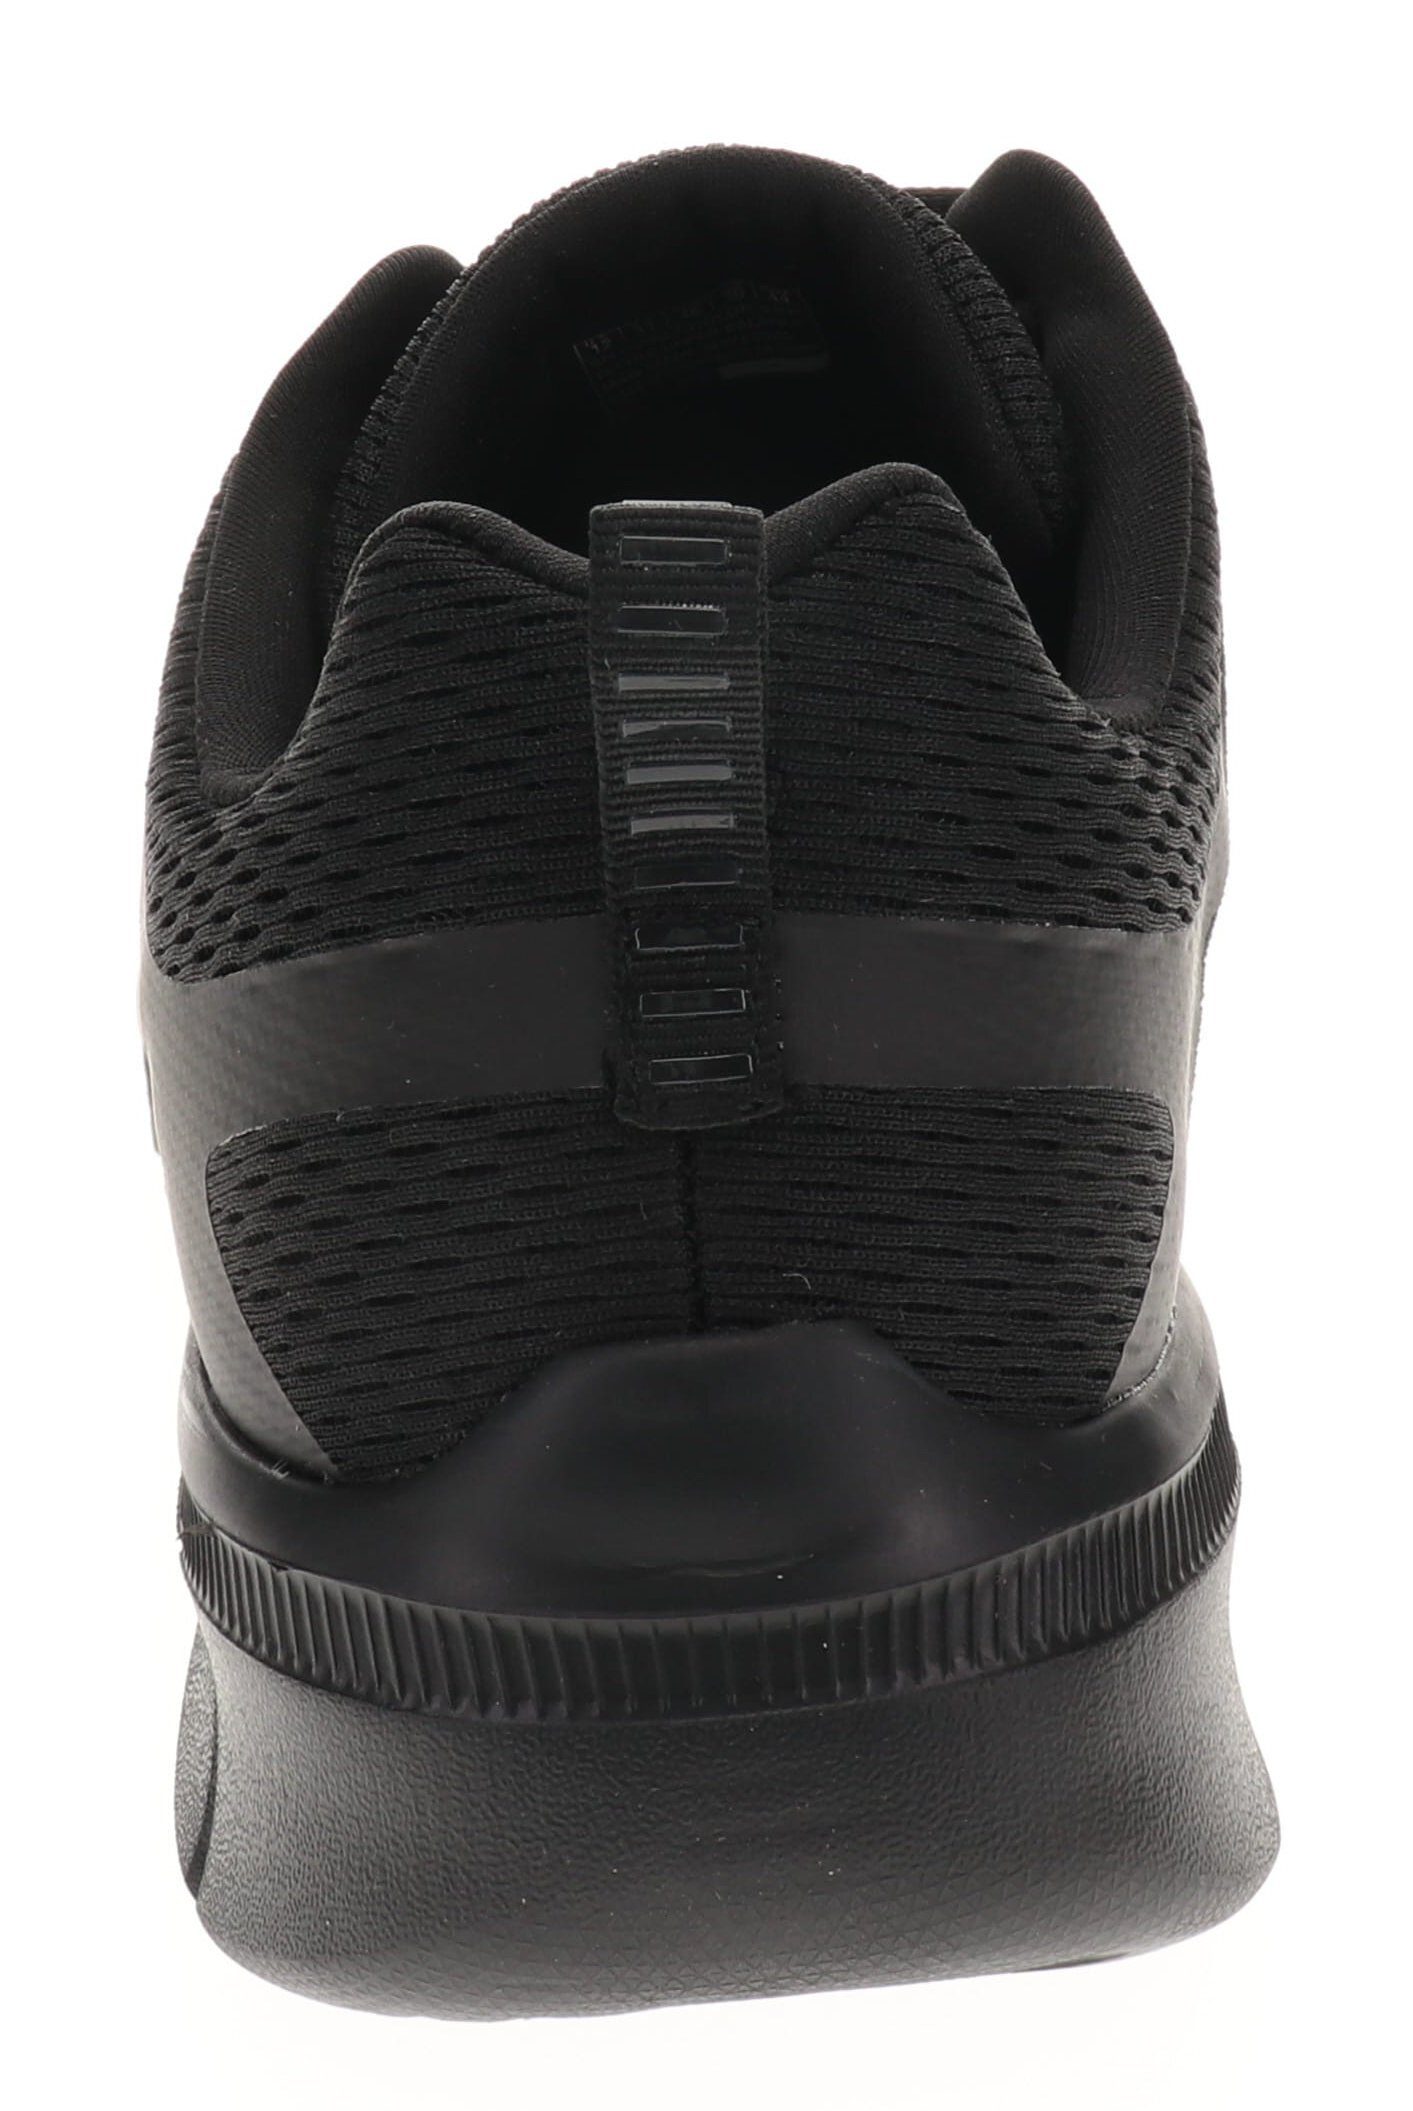 Skechers Equalizer schwarz 3.0 Sneaker